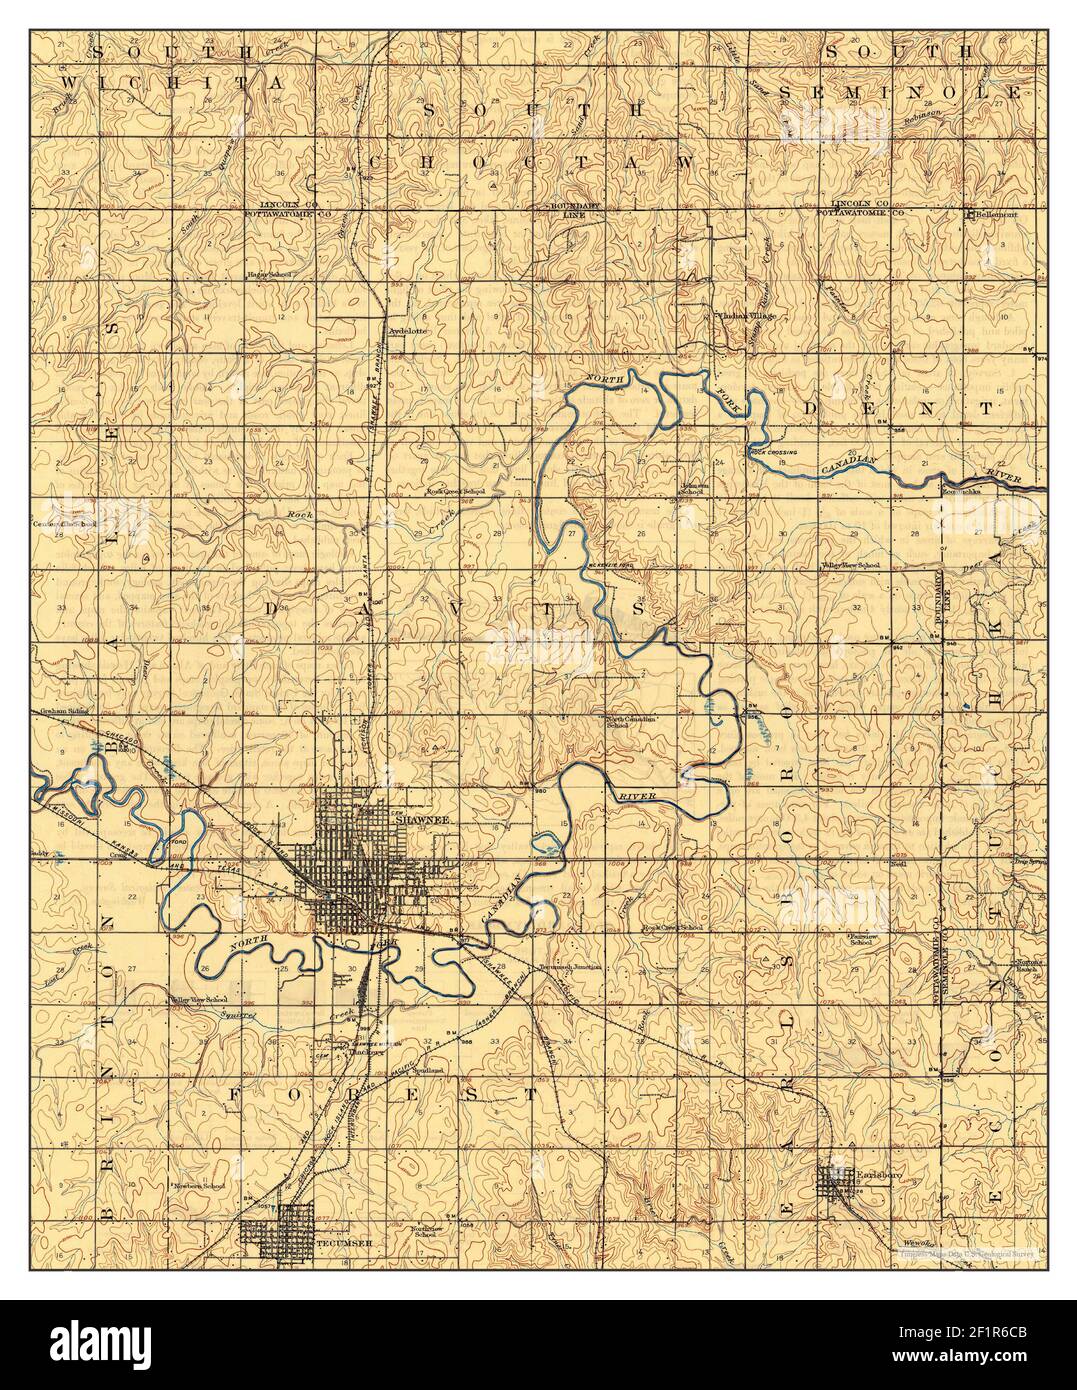 Shawnee, Oklahoma, map 1909, 1:62500, United States of America by Timeless Maps, data U.S. Geological Survey Foto Stock